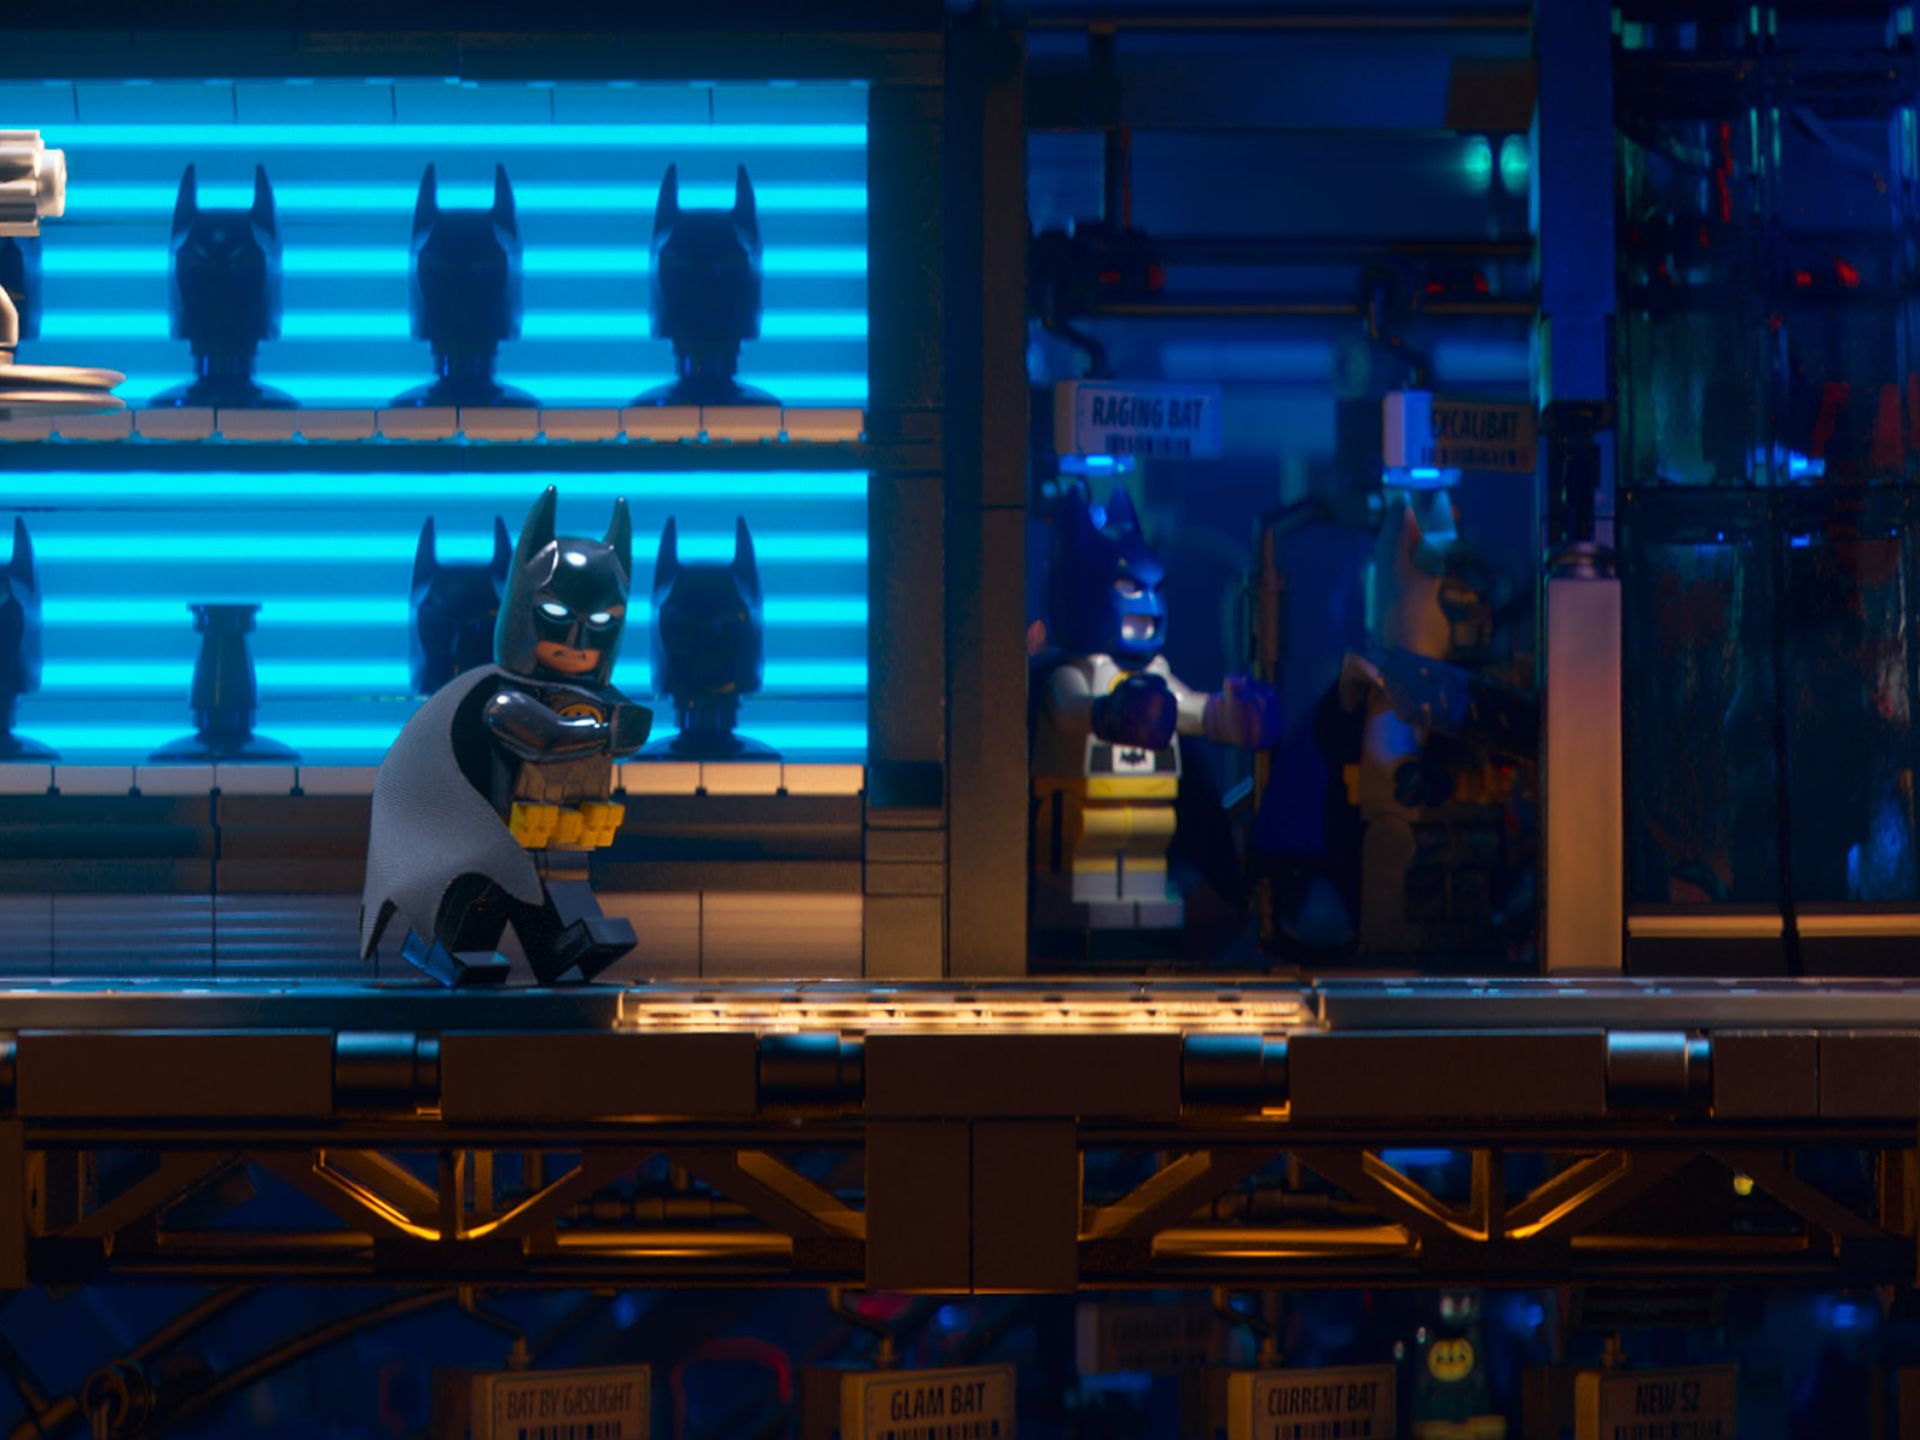 The LEGO Batman Movie” Assembles Cinematic Pleasures of the Commercial Kind  – chrisreedfilm